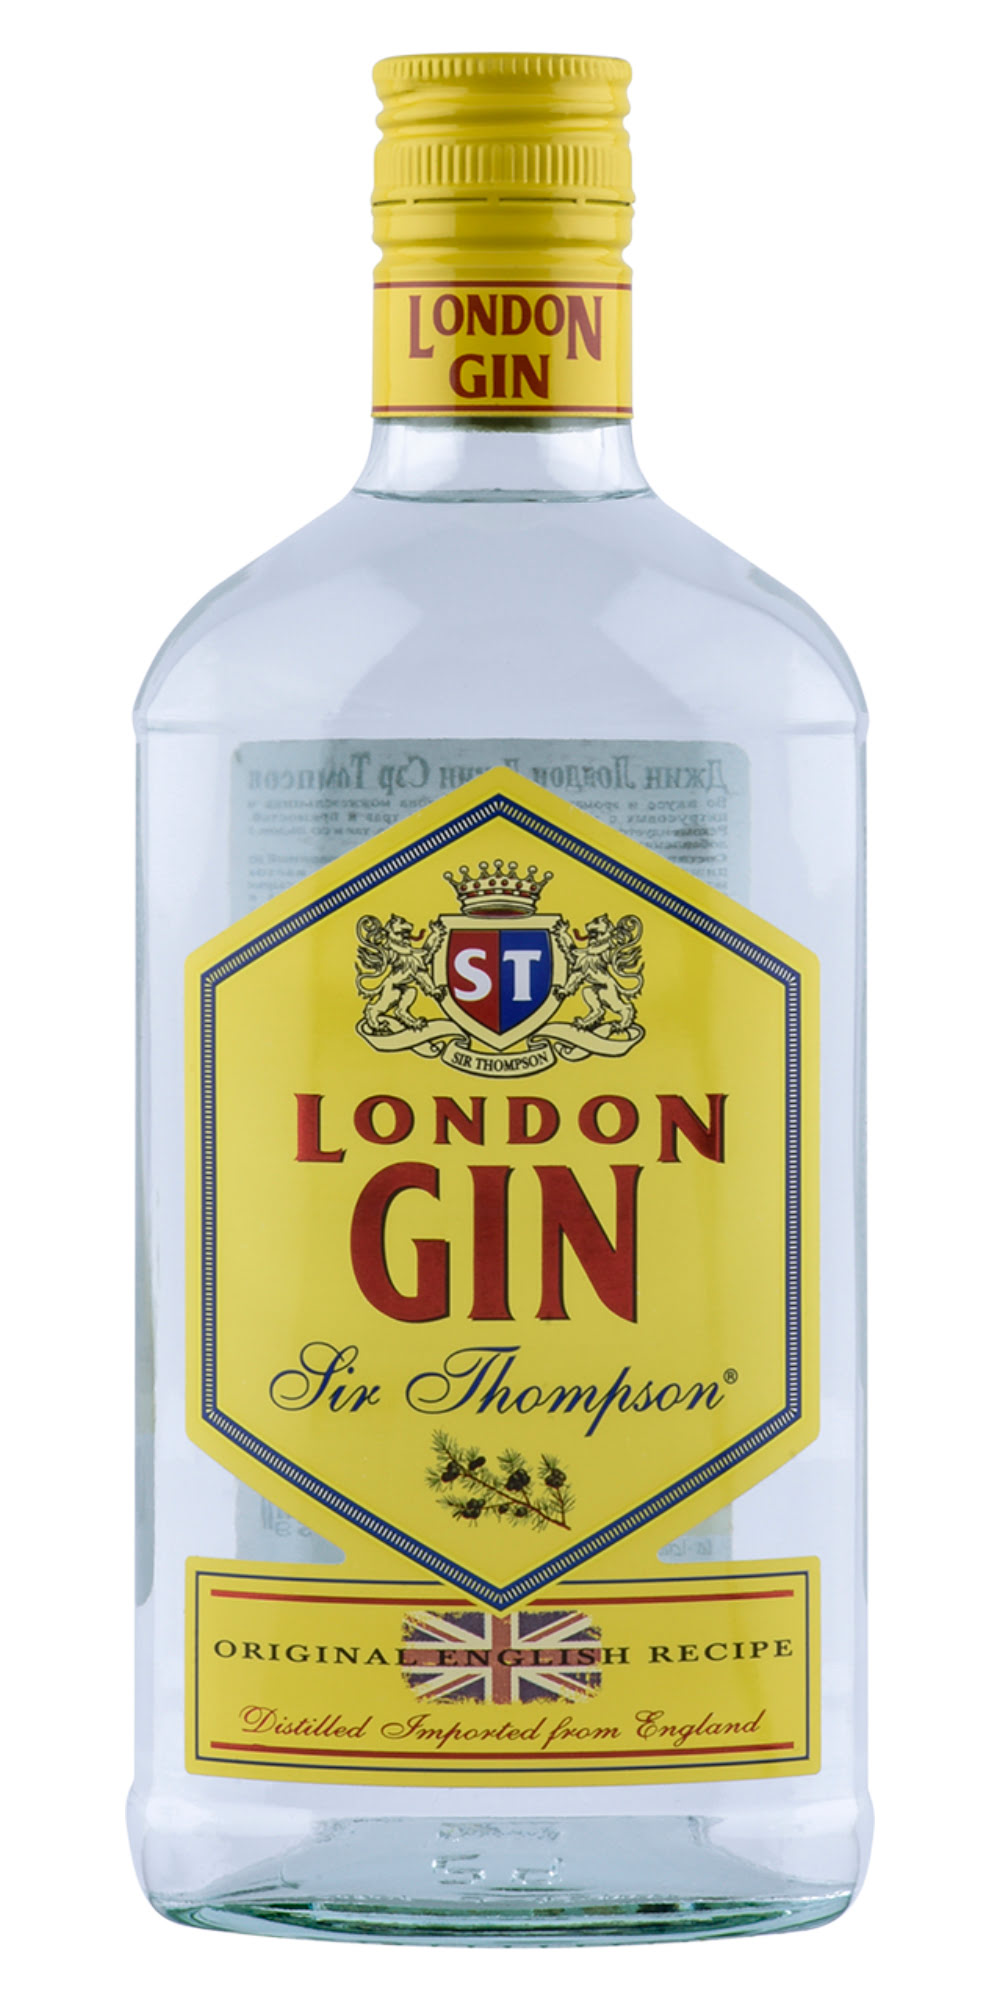 Gin 0.7. Джин James Langley London Gin 0.7l. Лондон Джин сэр Томпсон. Лондон Джин 0.7. Джин London Gin 0.7.